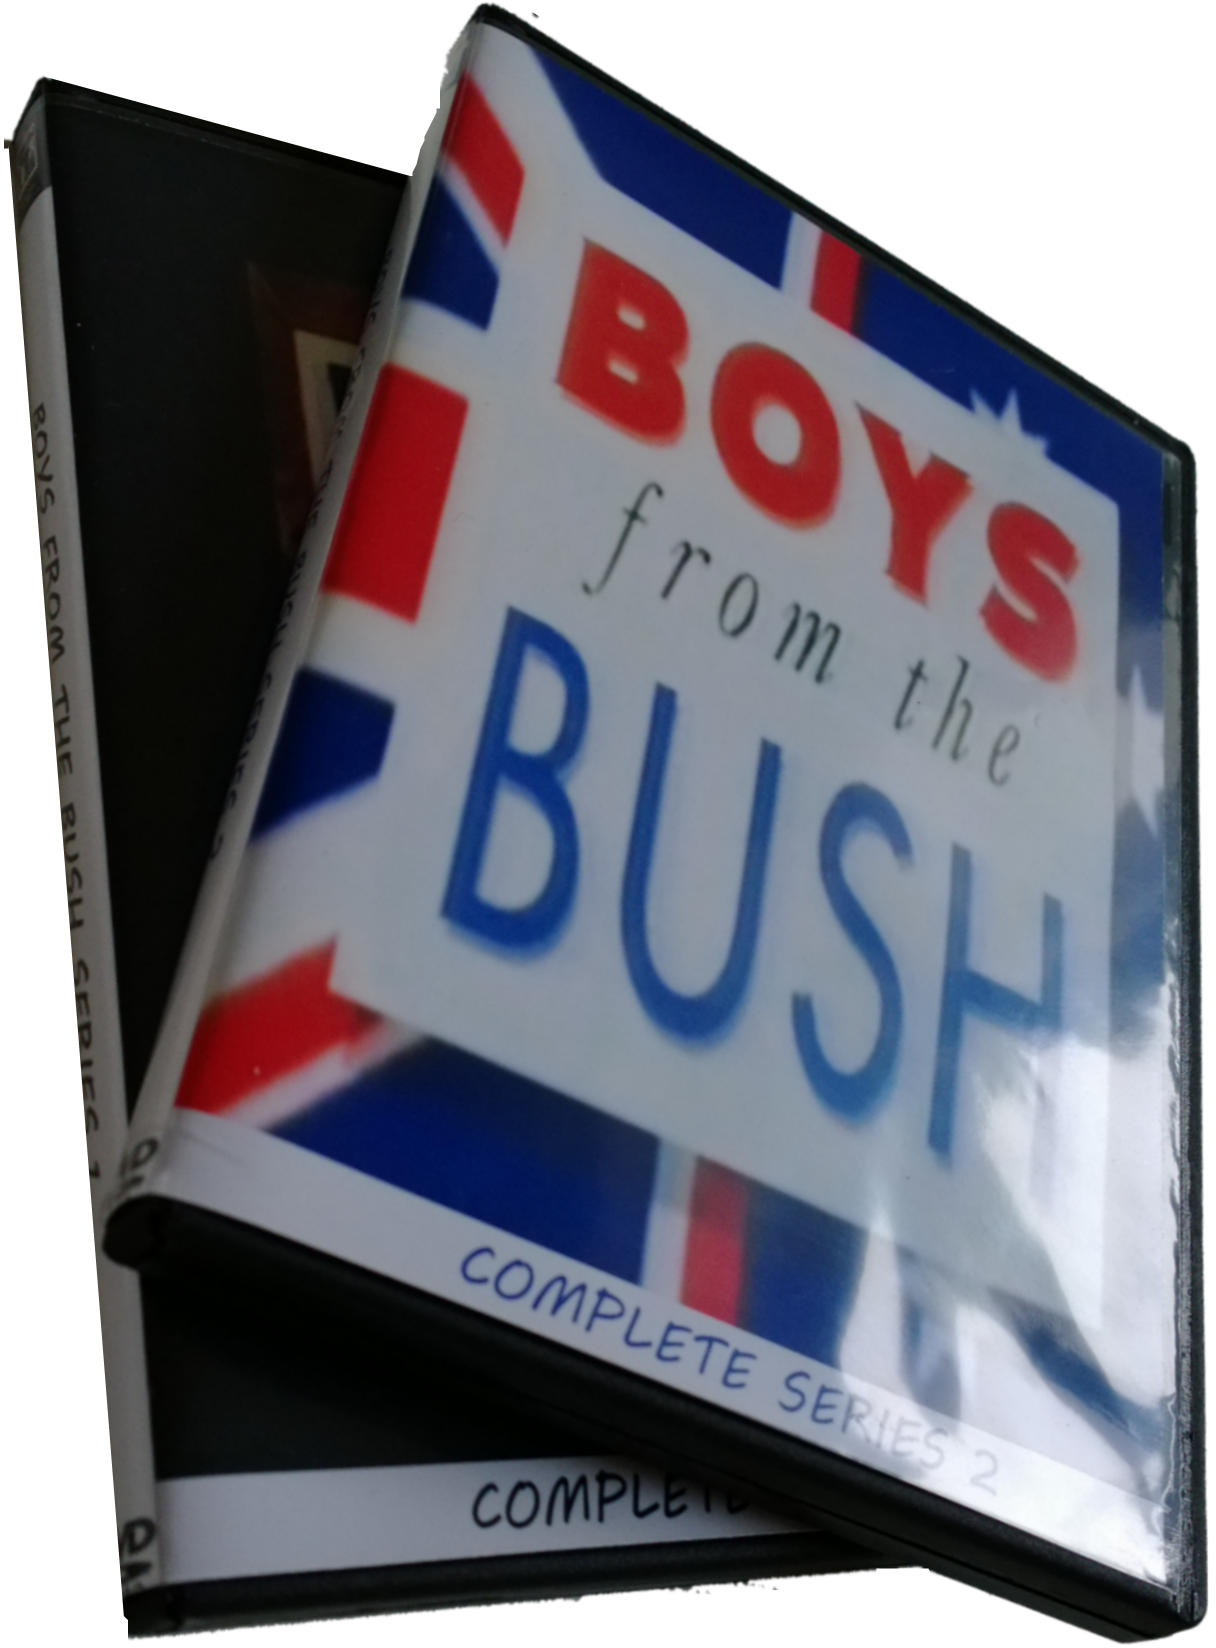 Boys from the Bush TV Series Season 1 & 2 (6 DVD Set) Tim Healy